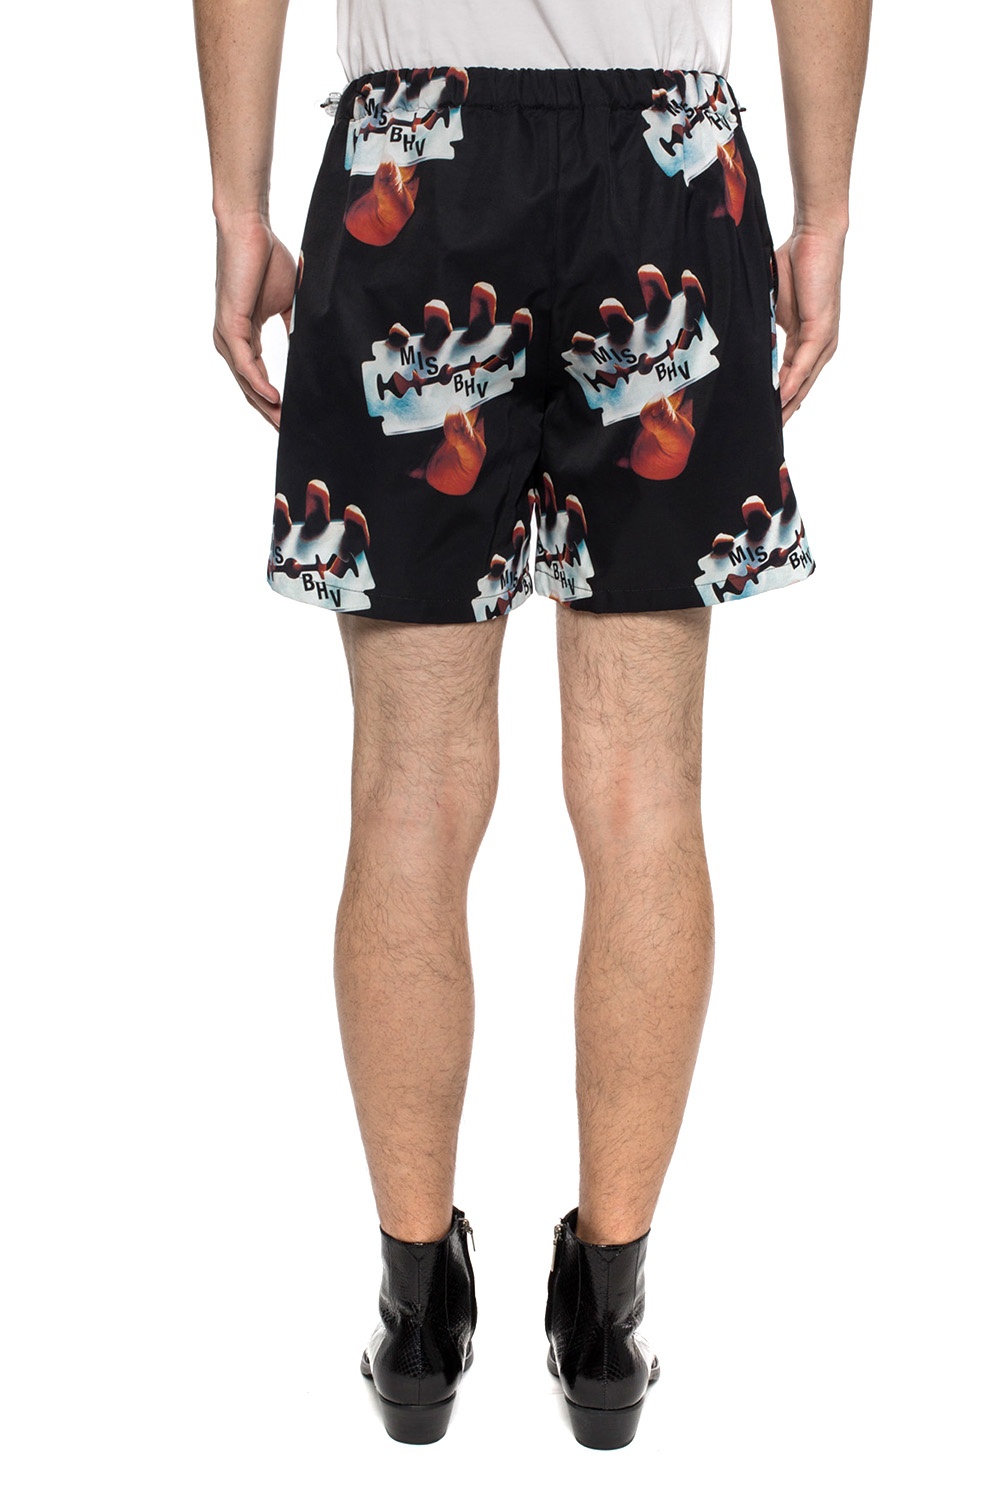 MISBHV Printed shorts | Men's |